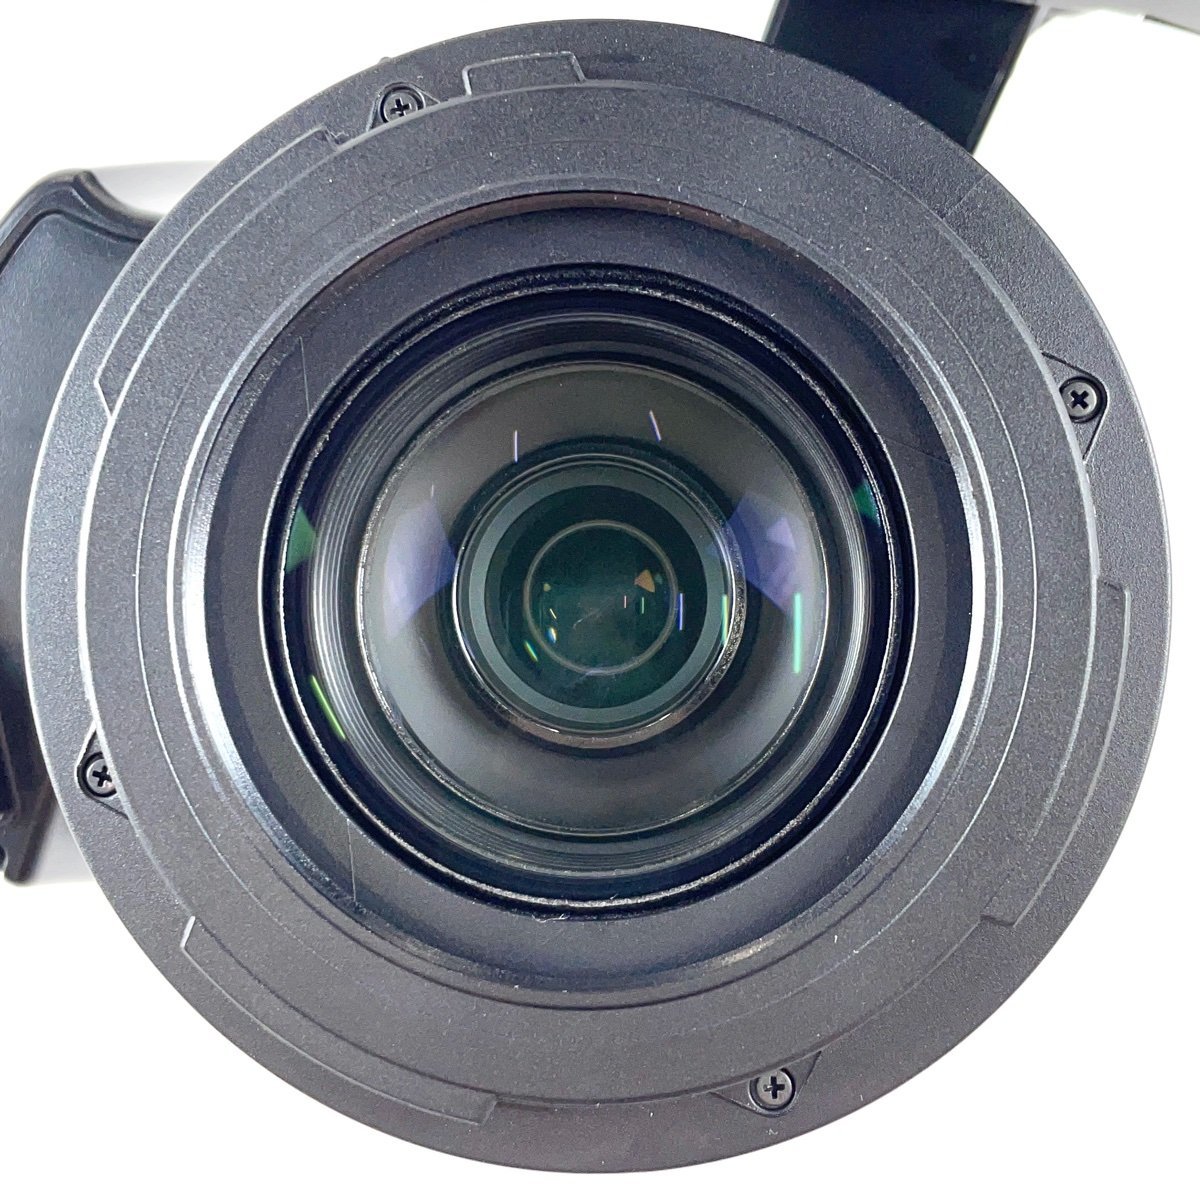  Sony SONY HXR-NX100 для бизнеса видео камера [ утиль ] [ б/у ]